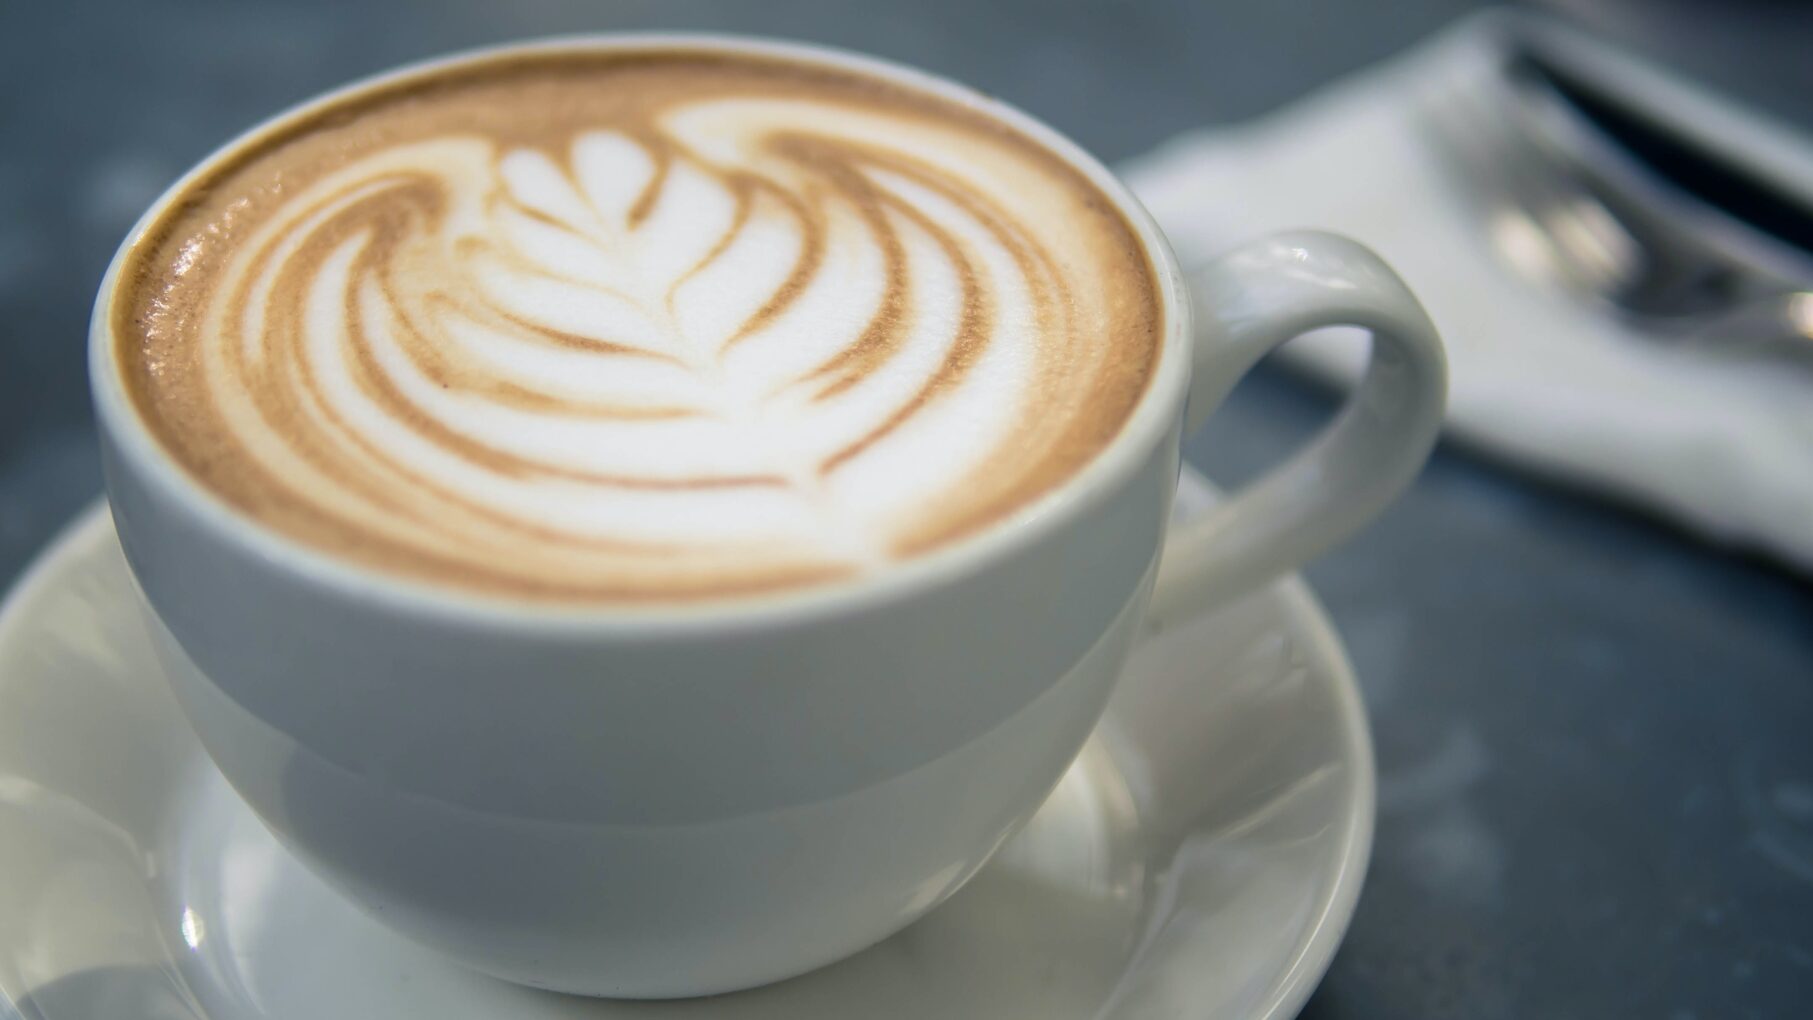 A cappuccino with foam art